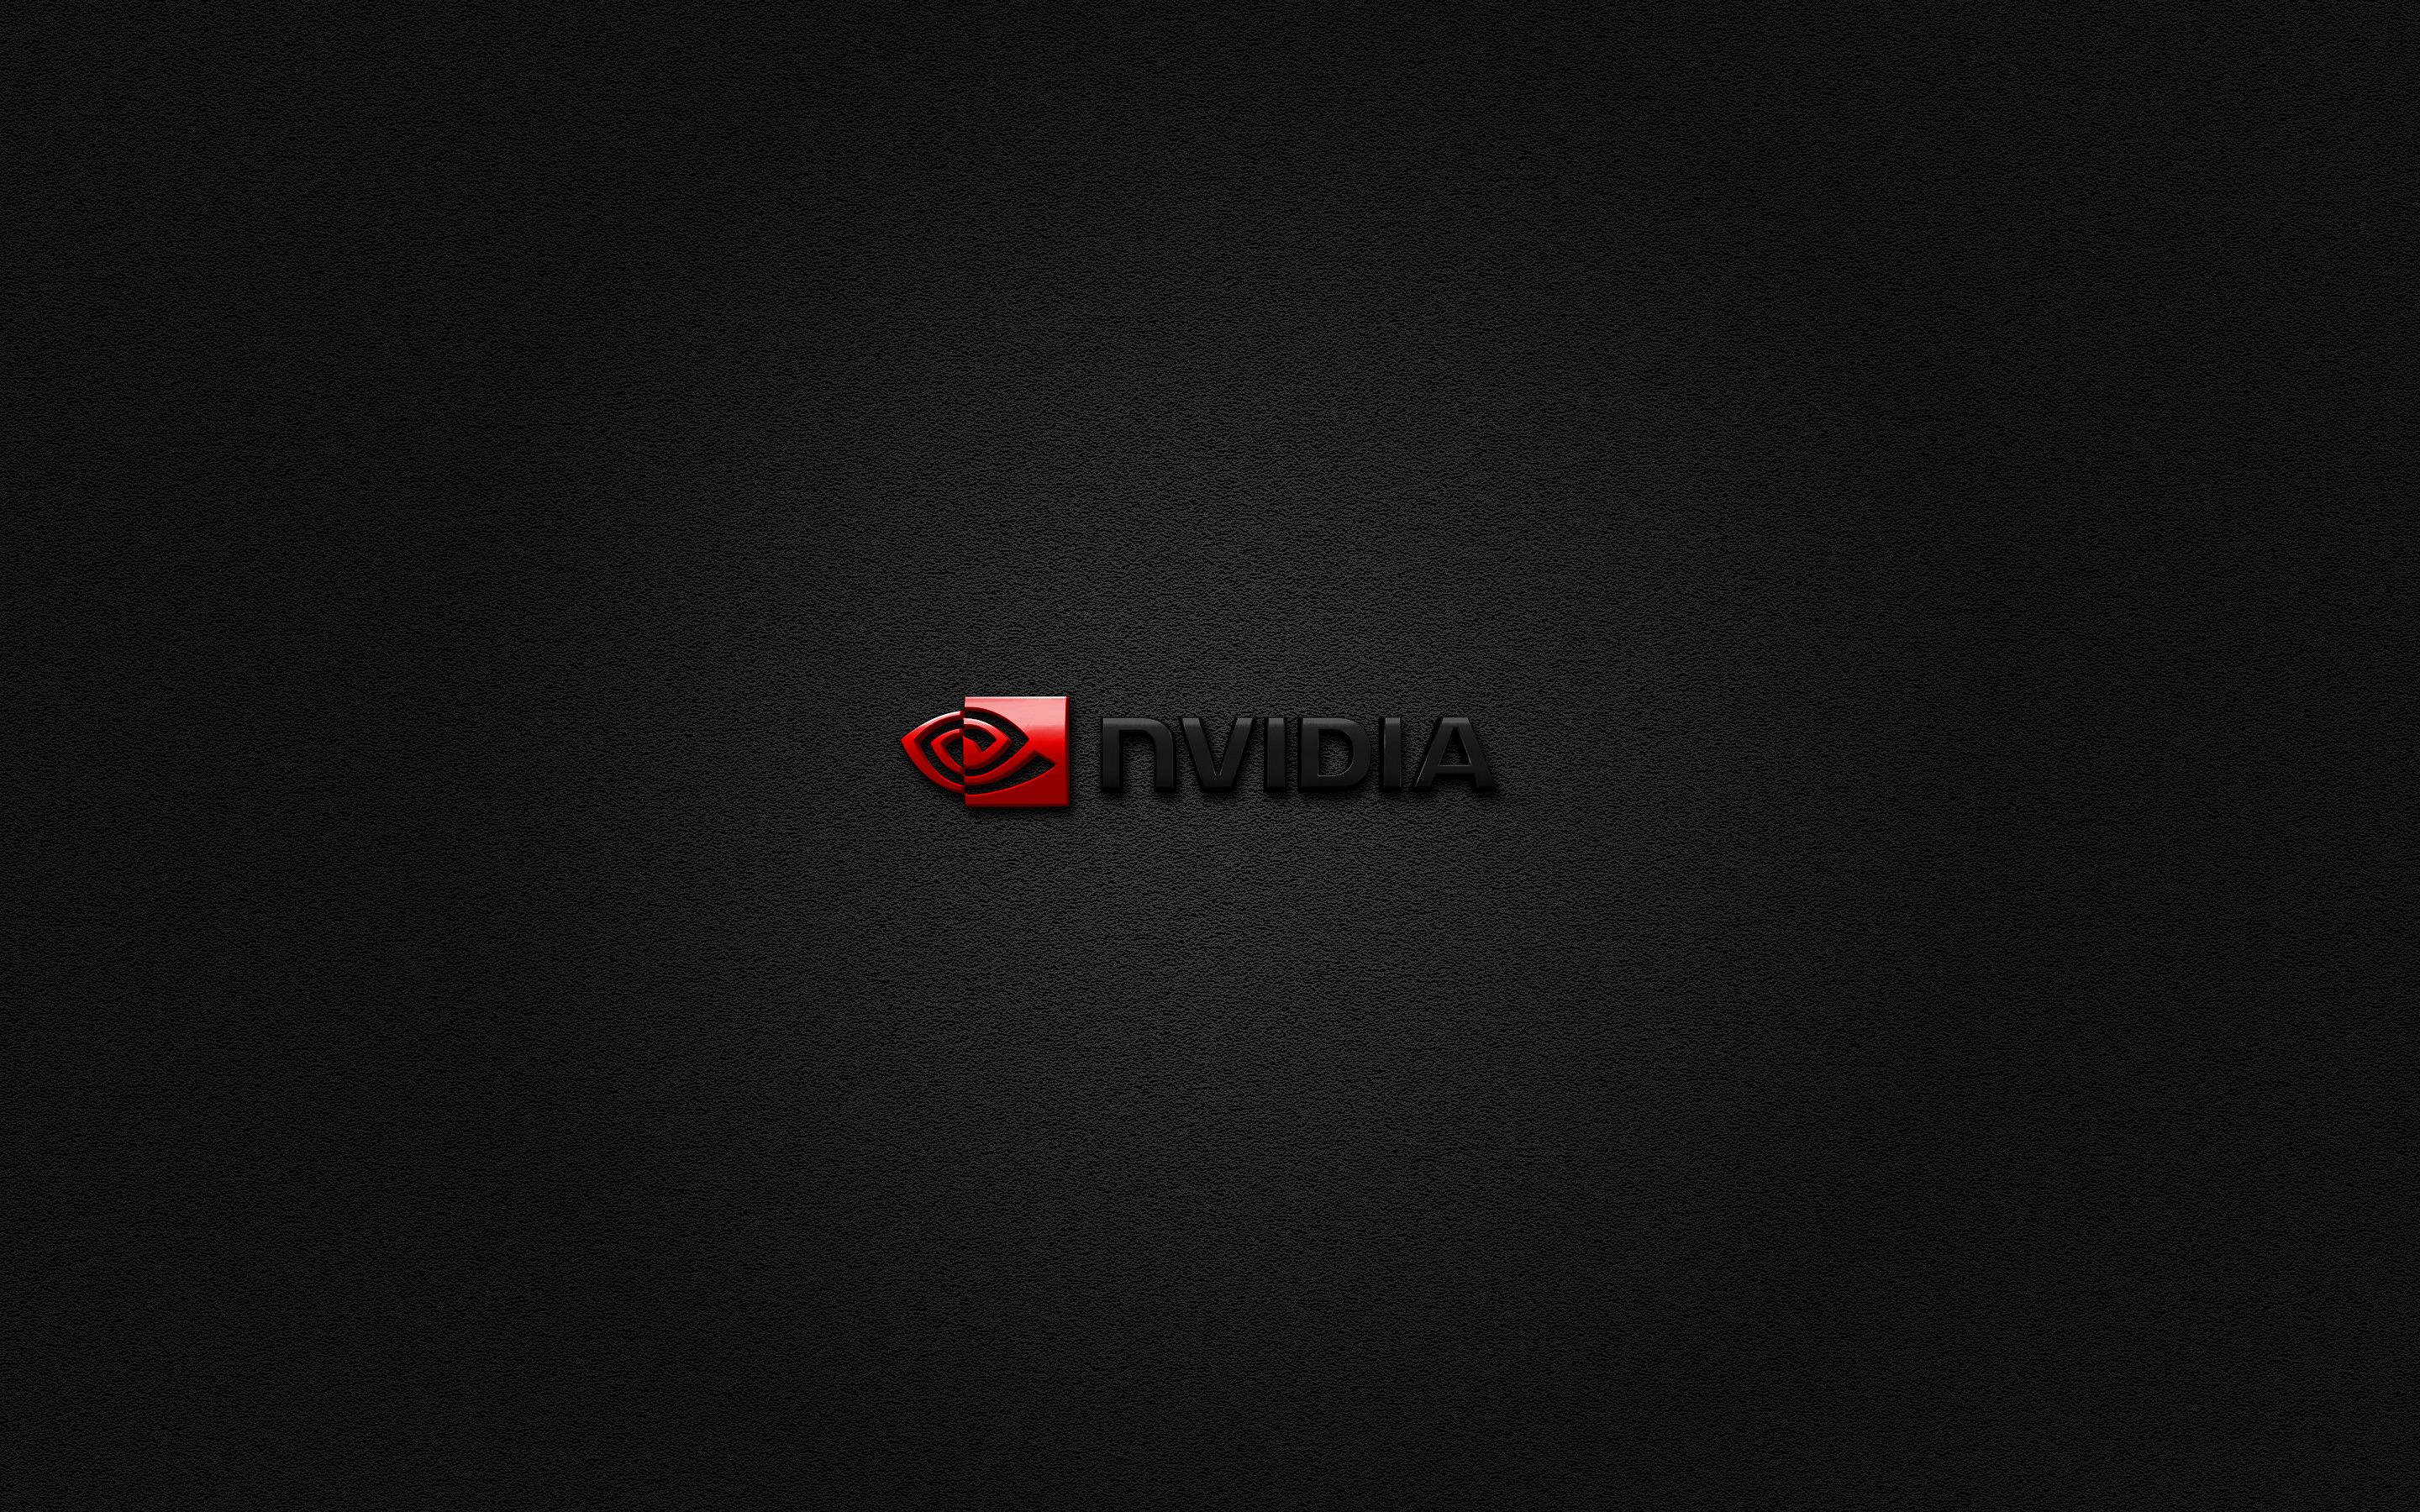 Nvidia Red Wallpapernvidia Red Wallpaper 2880x1800 Windows 10 PIC